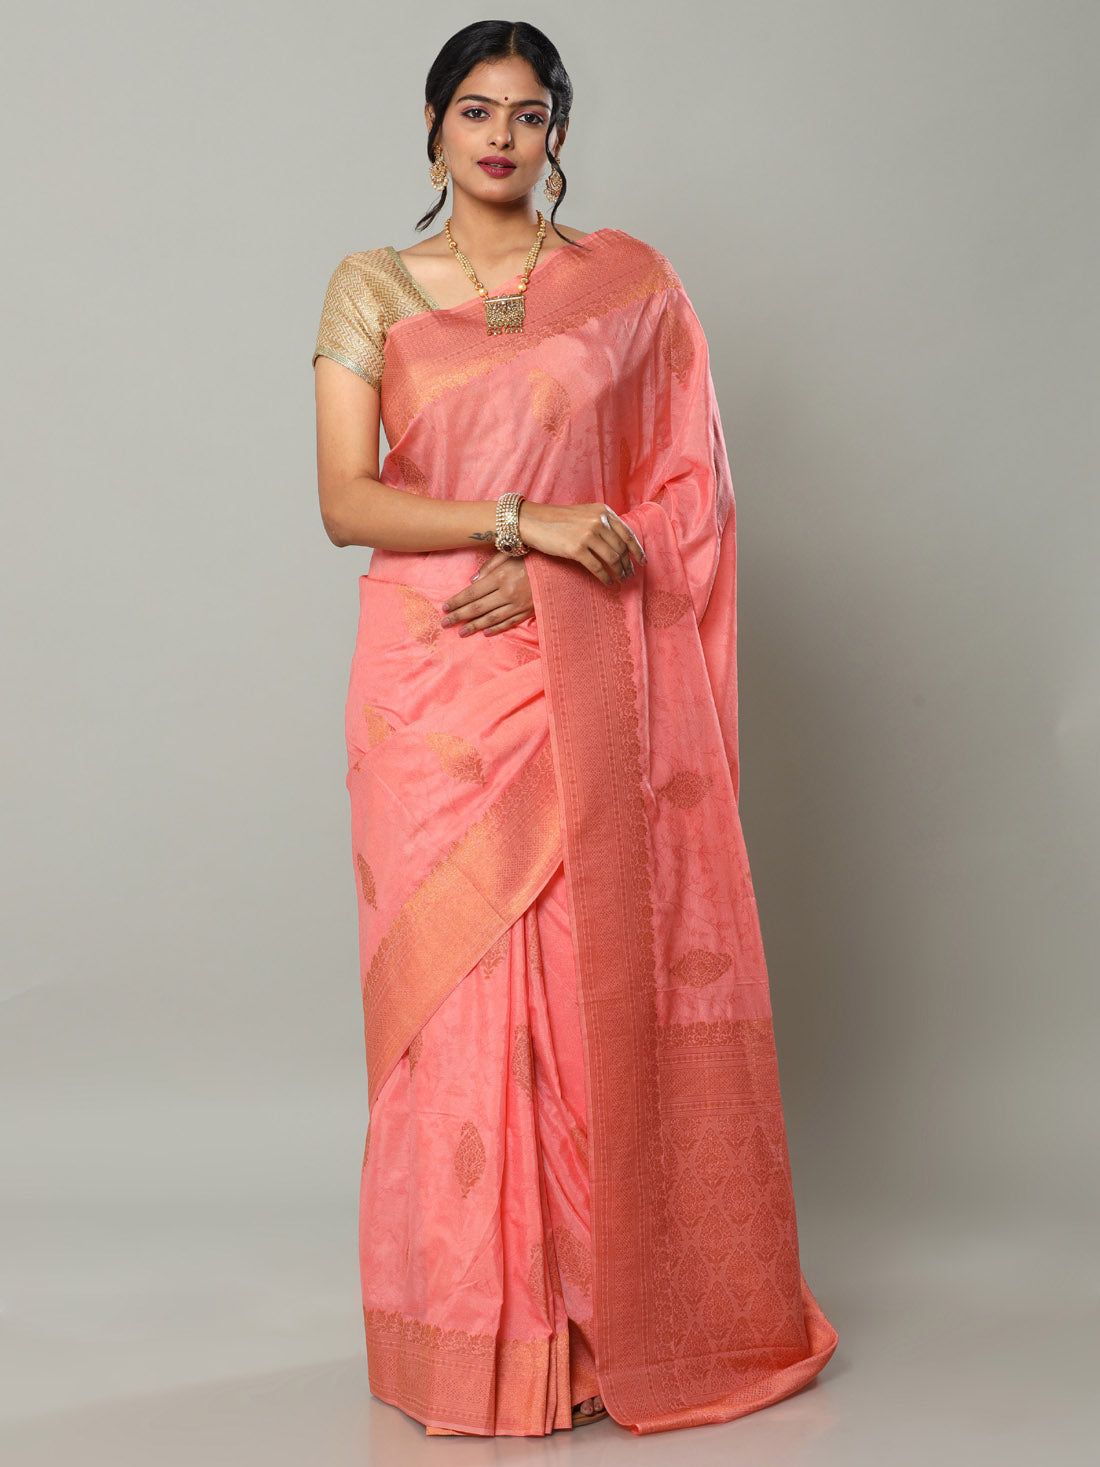 HerClozet Women's Woven Self weave Banarasi Khadi Chiffon Saree -6.3 Mtr(Peach Pink)